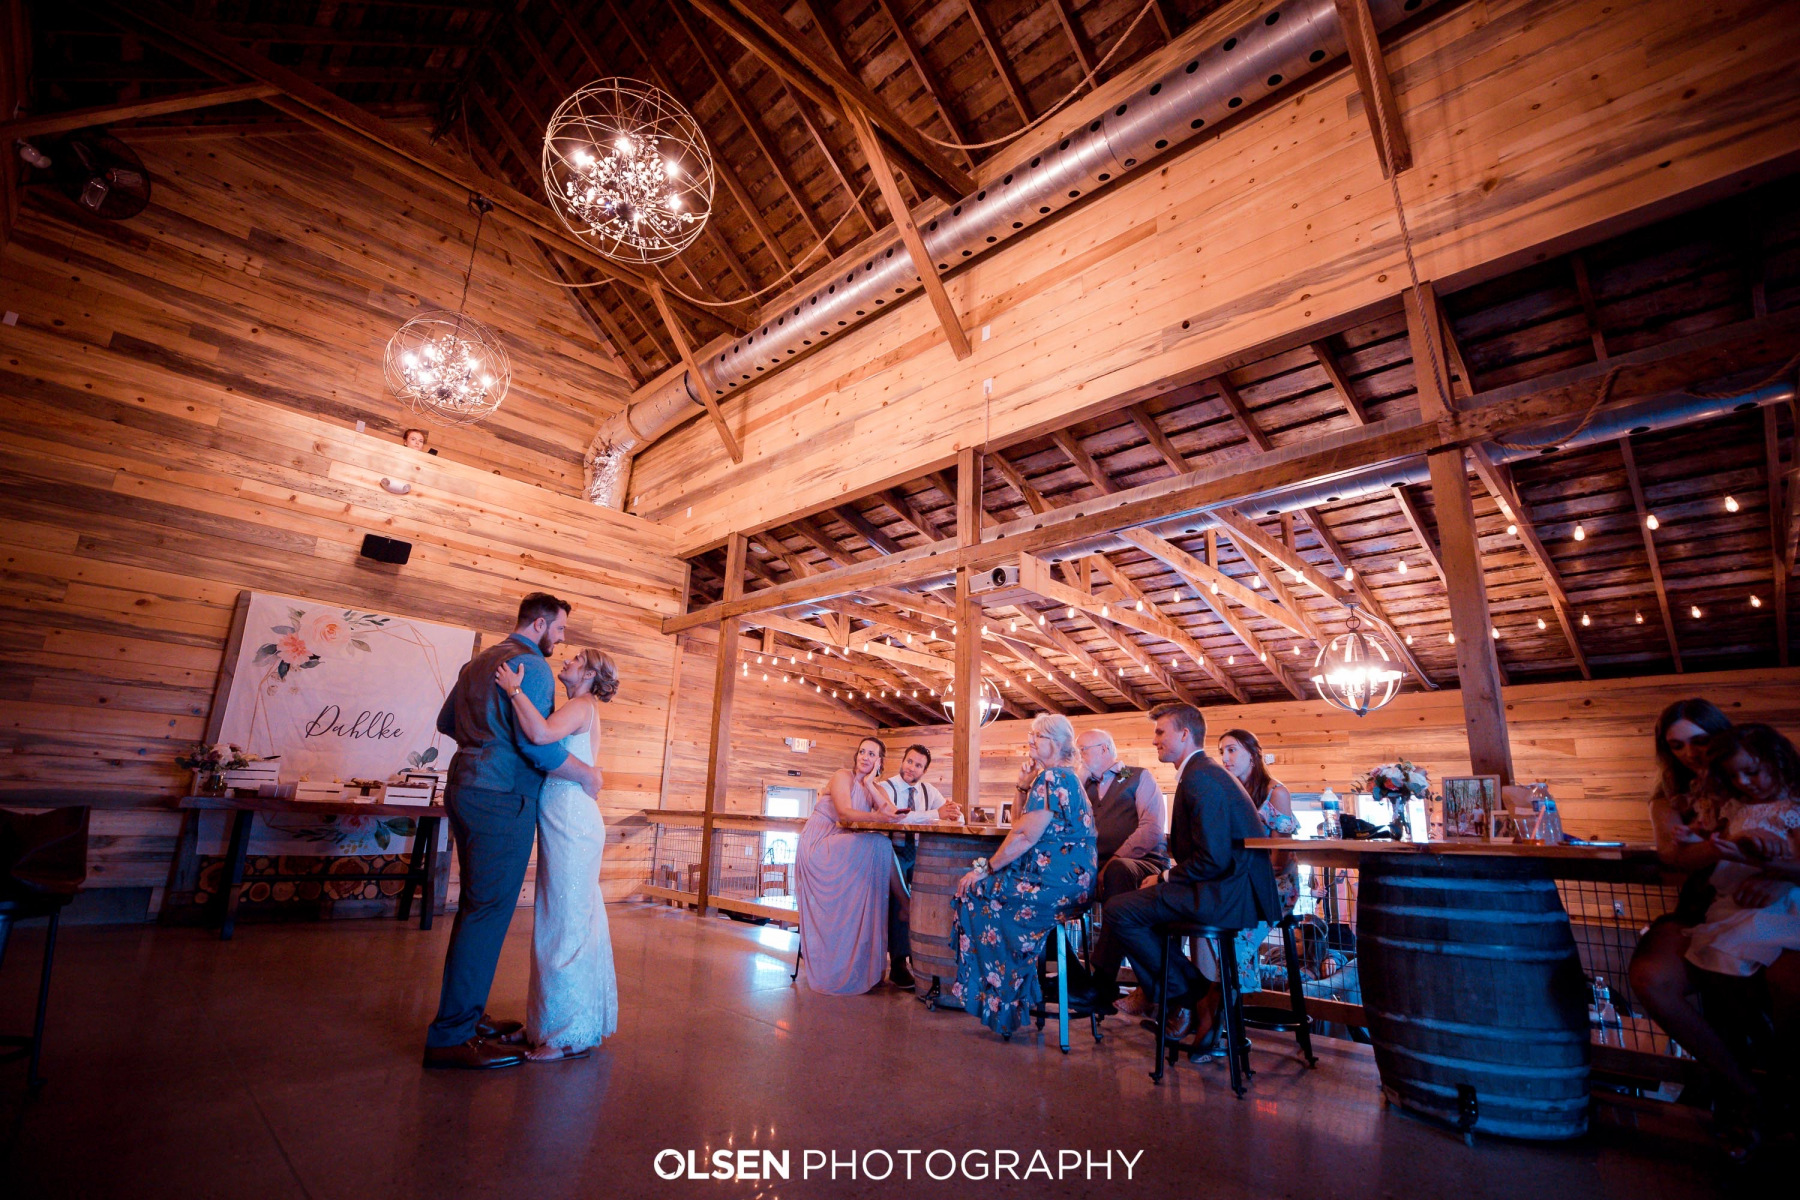 Sparks Barn
Country Wedding Venue
Country Reception Venue 
Louisville, Nebraska
Olsen Photography